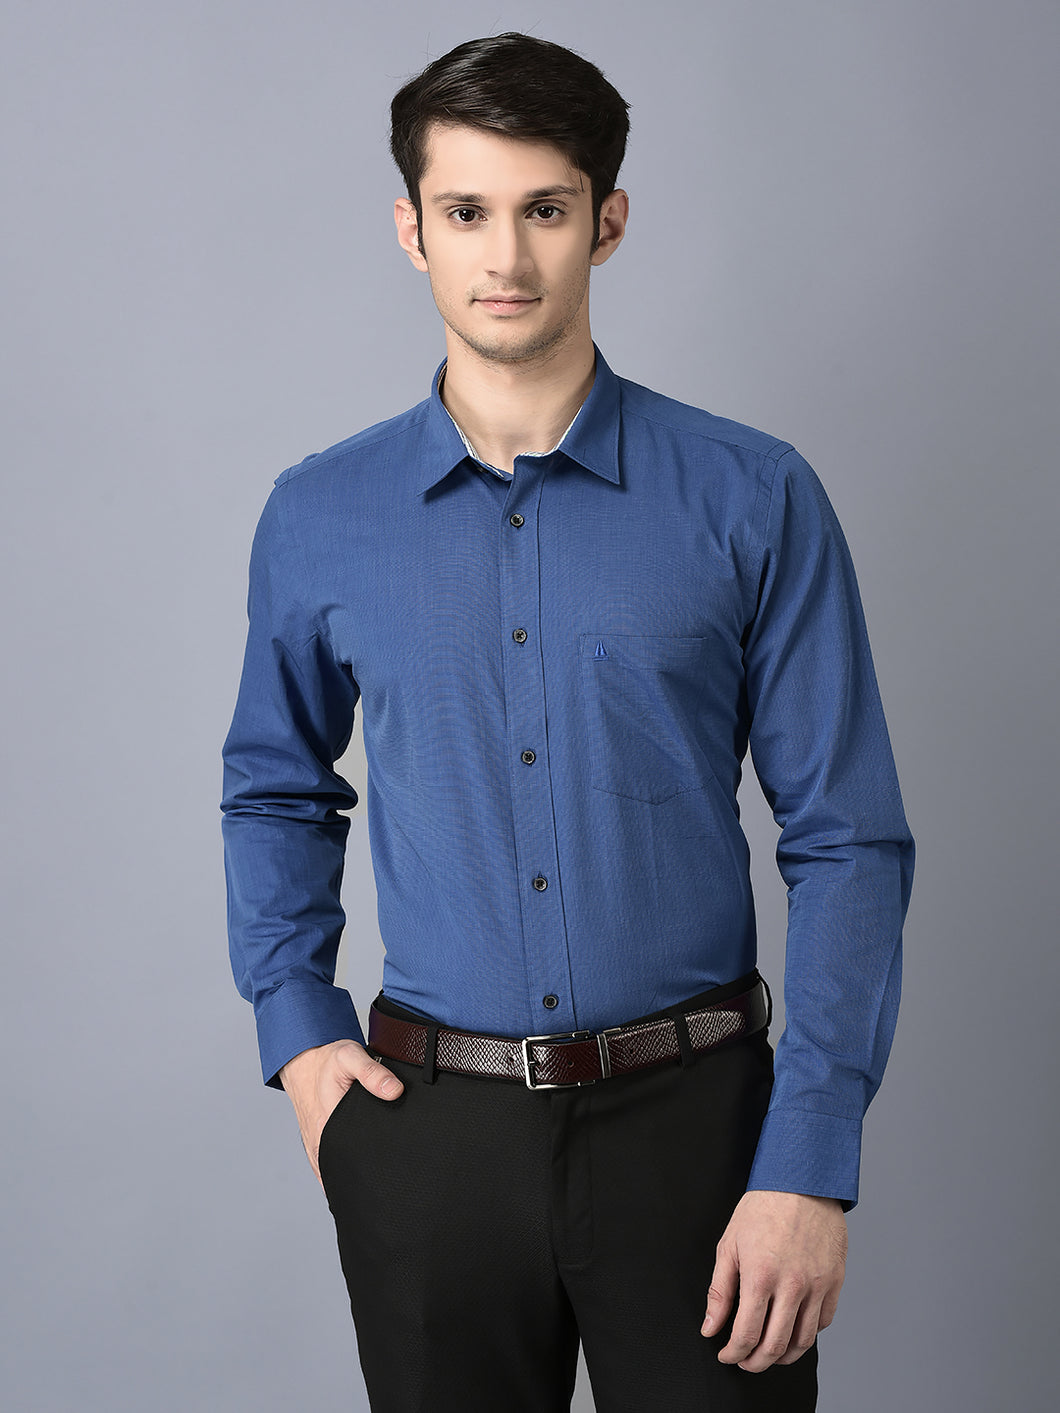 CANOE MEN Formal Shirt Multi Color Cotton Fabric Button Closure Solid